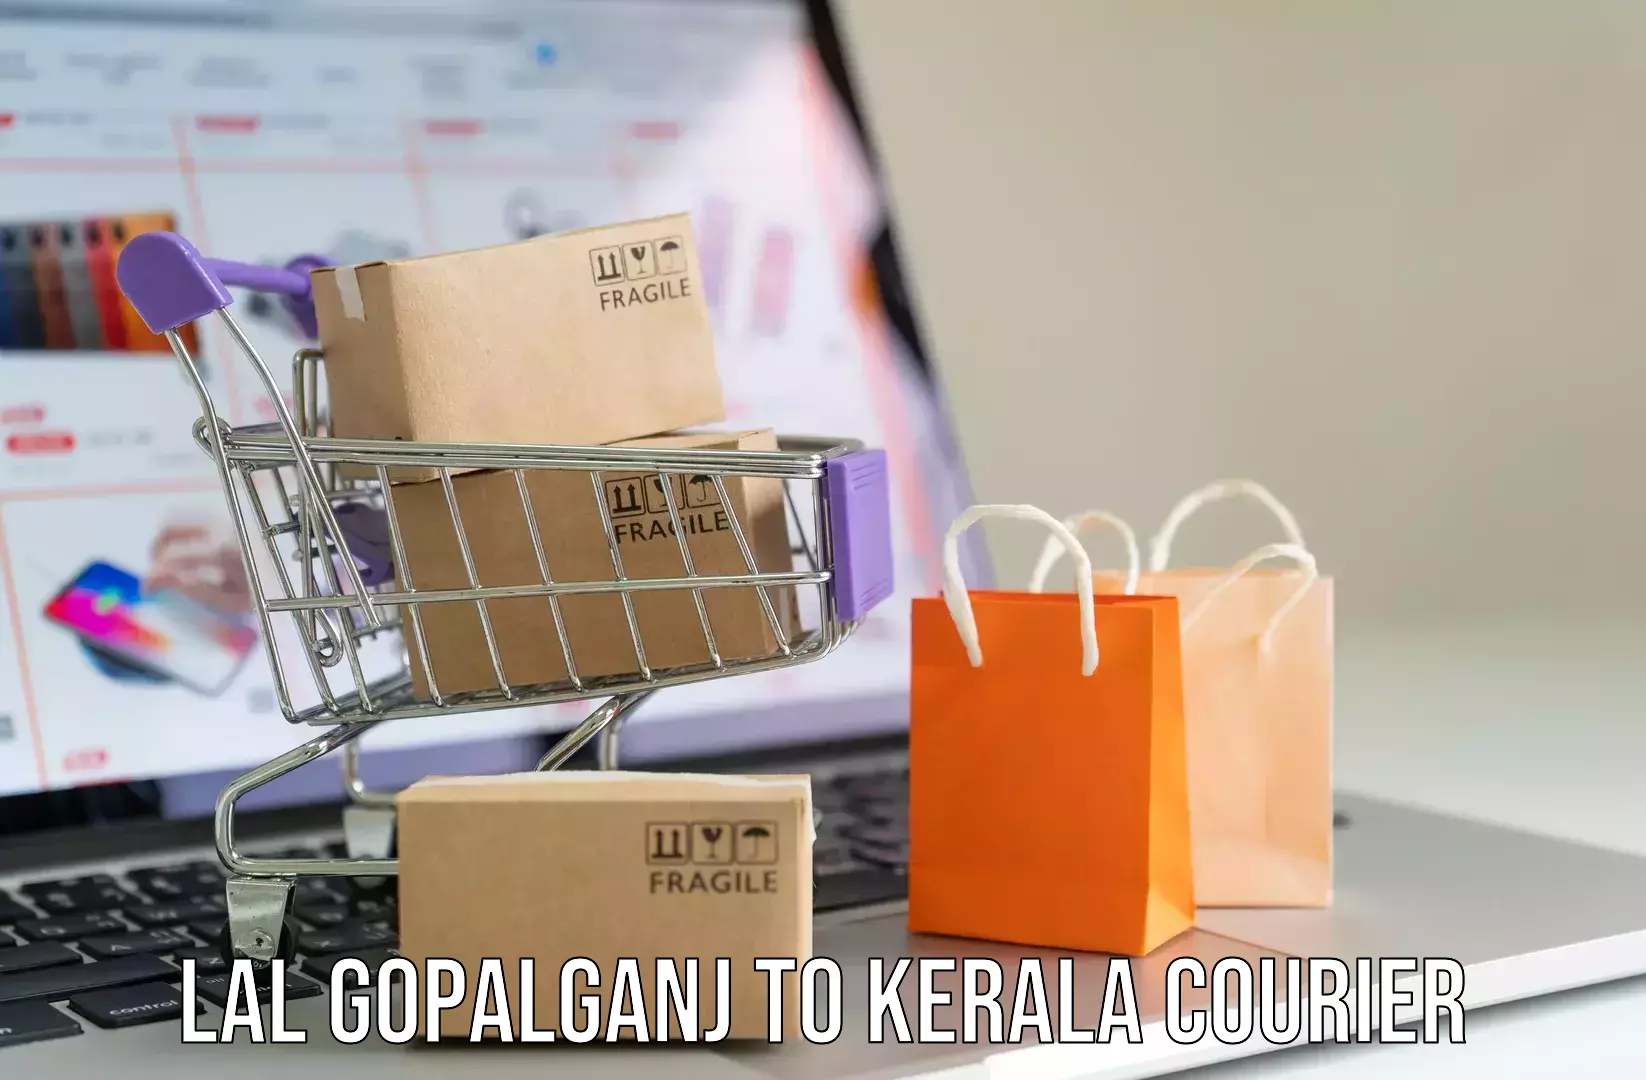 Door-to-door baggage service Lal Gopalganj to Cochin University of Science and Technology